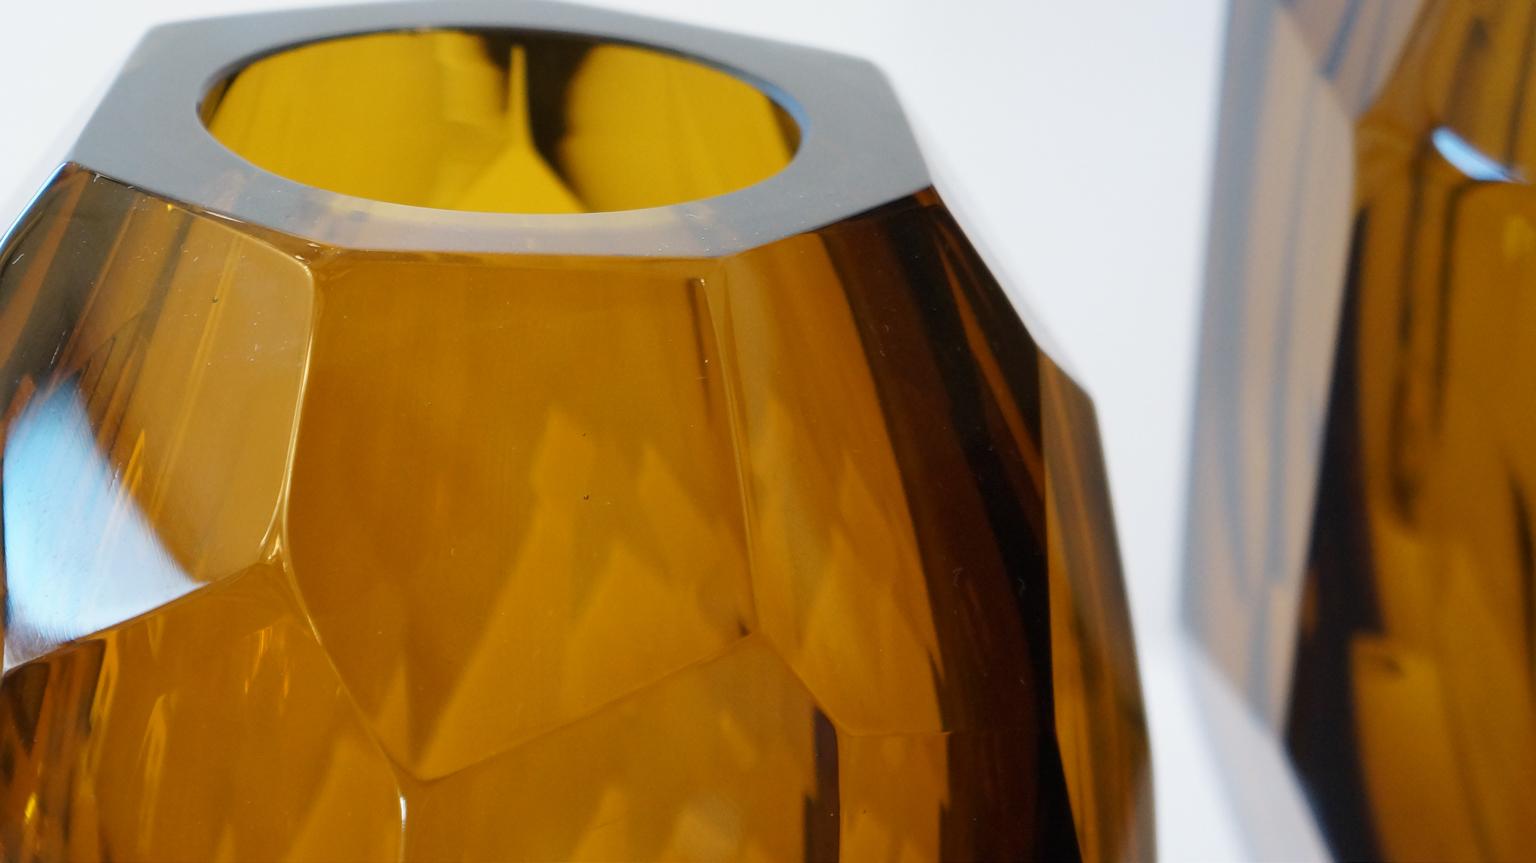 Donà Furnace Mid-Century Modern Amber Molato Three Murano Glass Vases, 1998s For Sale 4